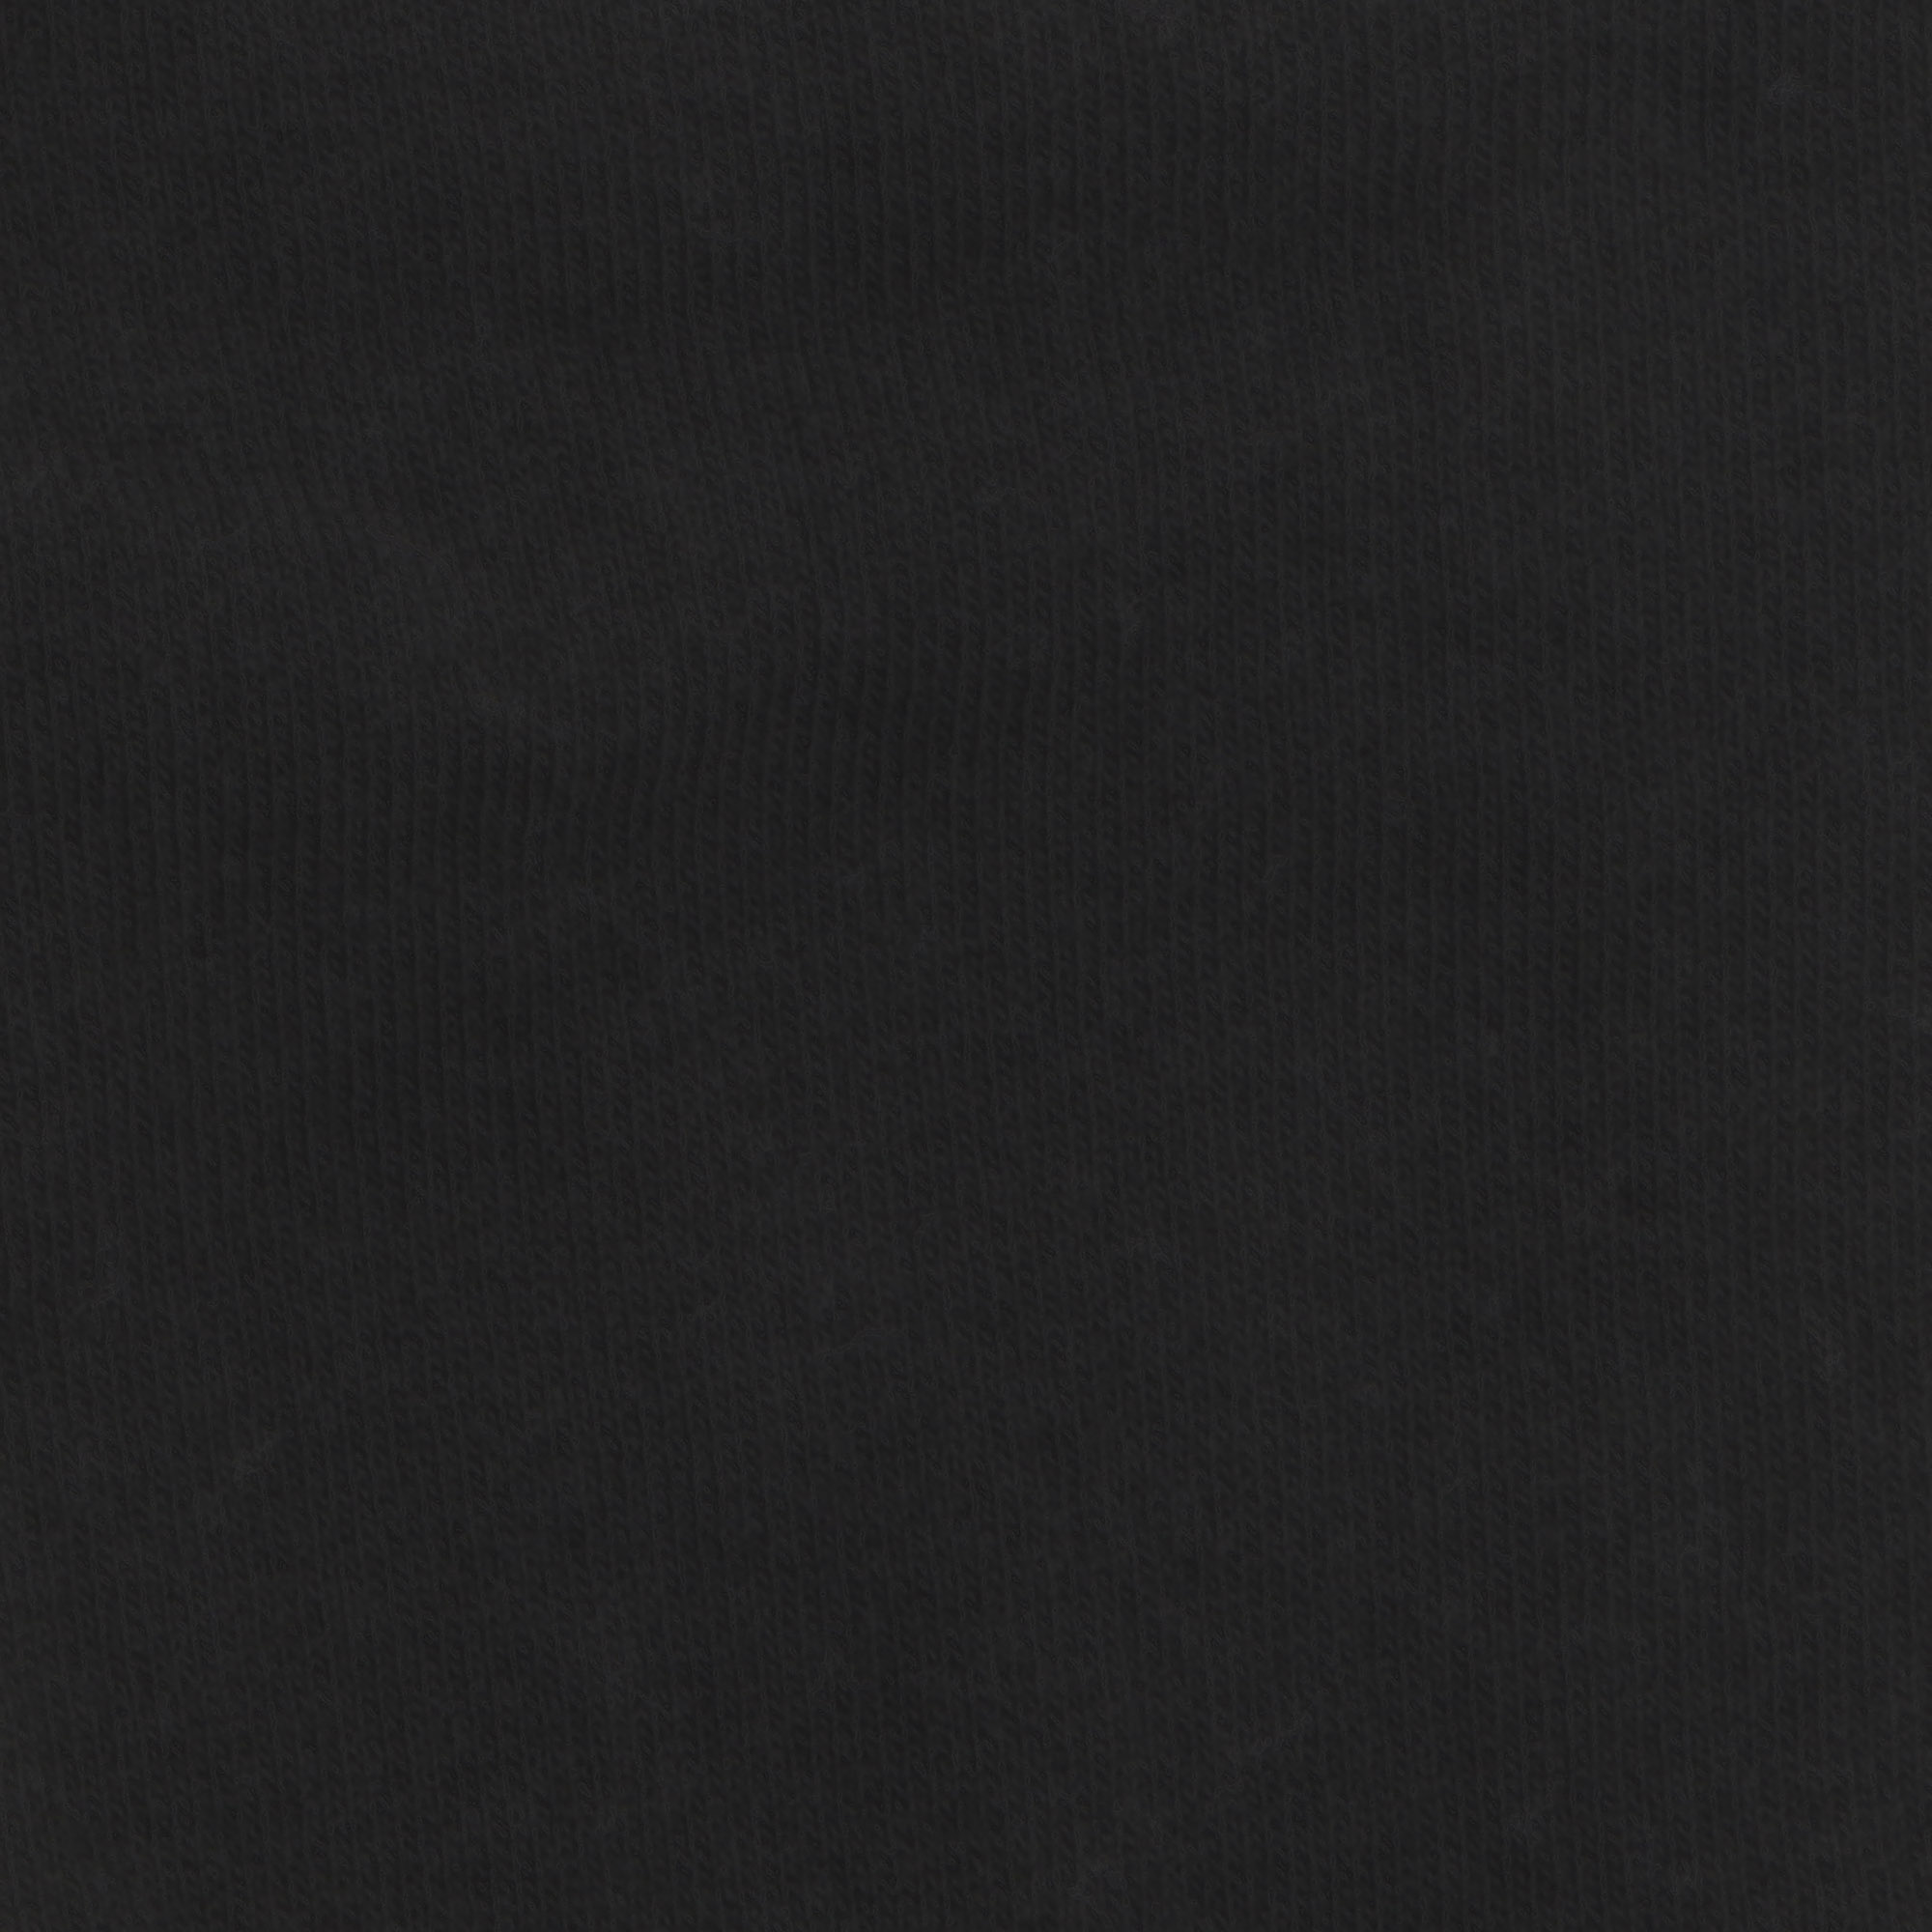 фото Носки мужские lucky socks 29-31 черные 1 пара